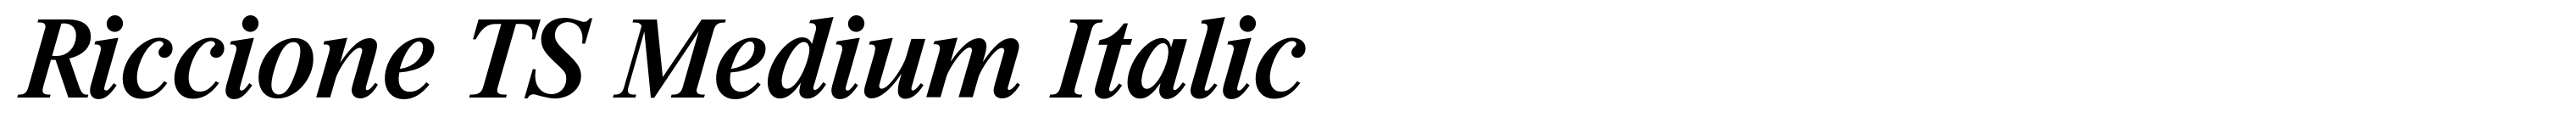 Riccione TS Medium Italic